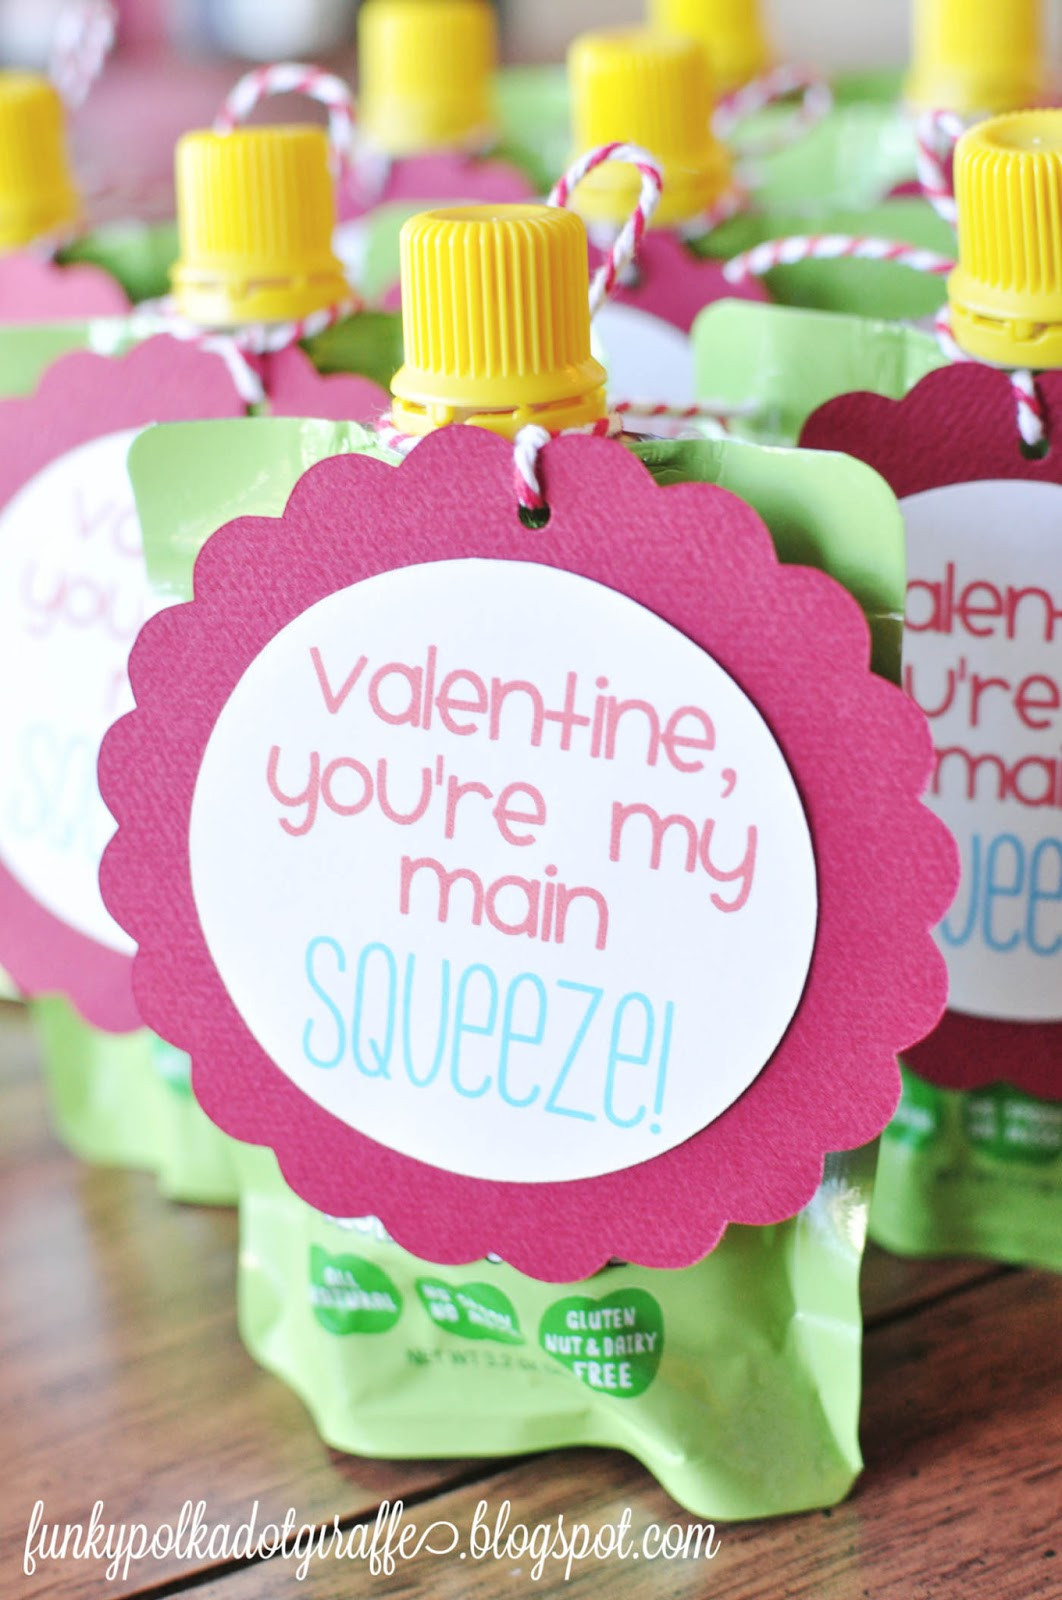 Valentine Gift Ideas For Toddlers
 Funky Polkadot Giraffe Preschool Valentines You re My